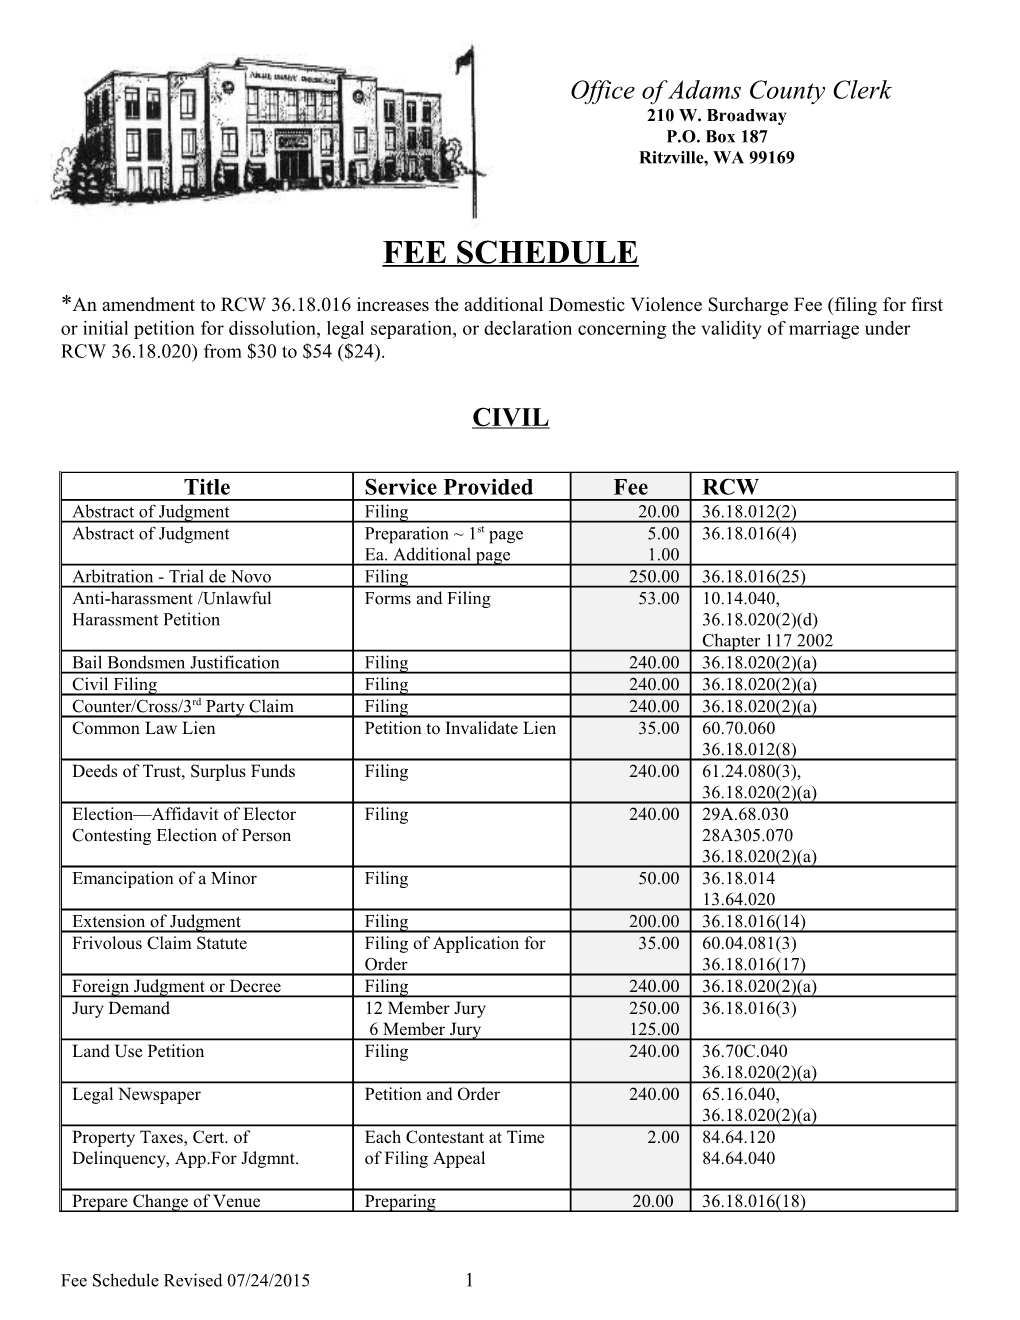 Thurston County Clerk's Fee Schedule